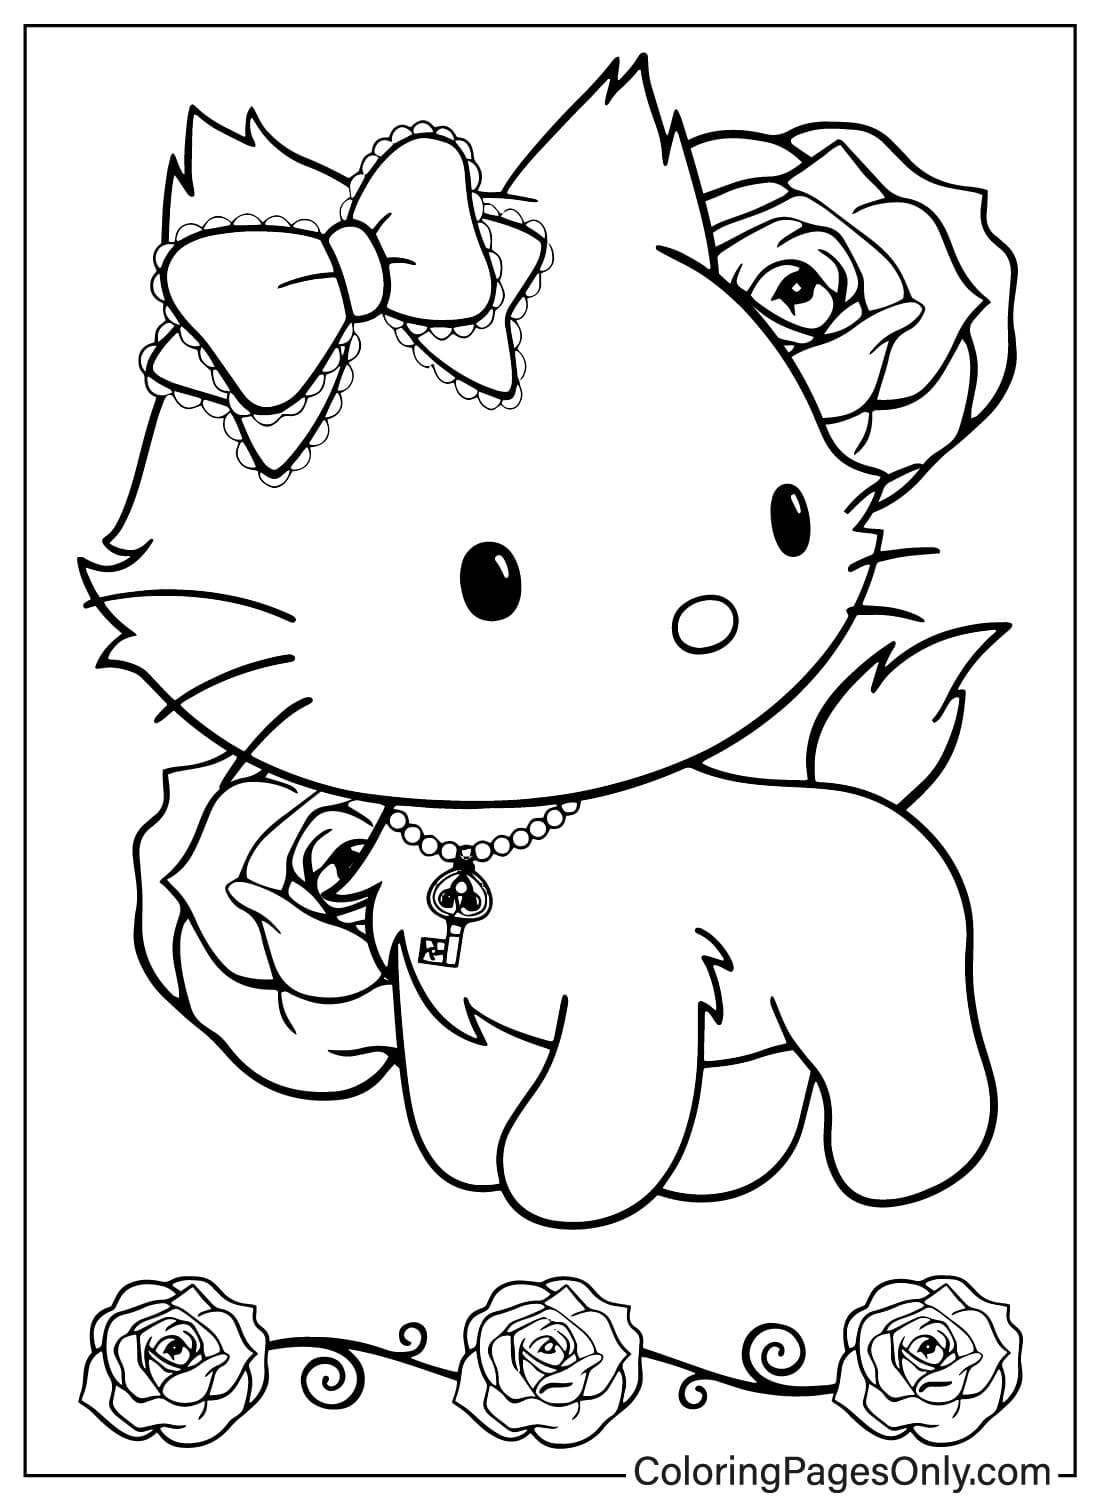 Página para colorear de Charmmy Kitty y Rose de Charmmy Kitty